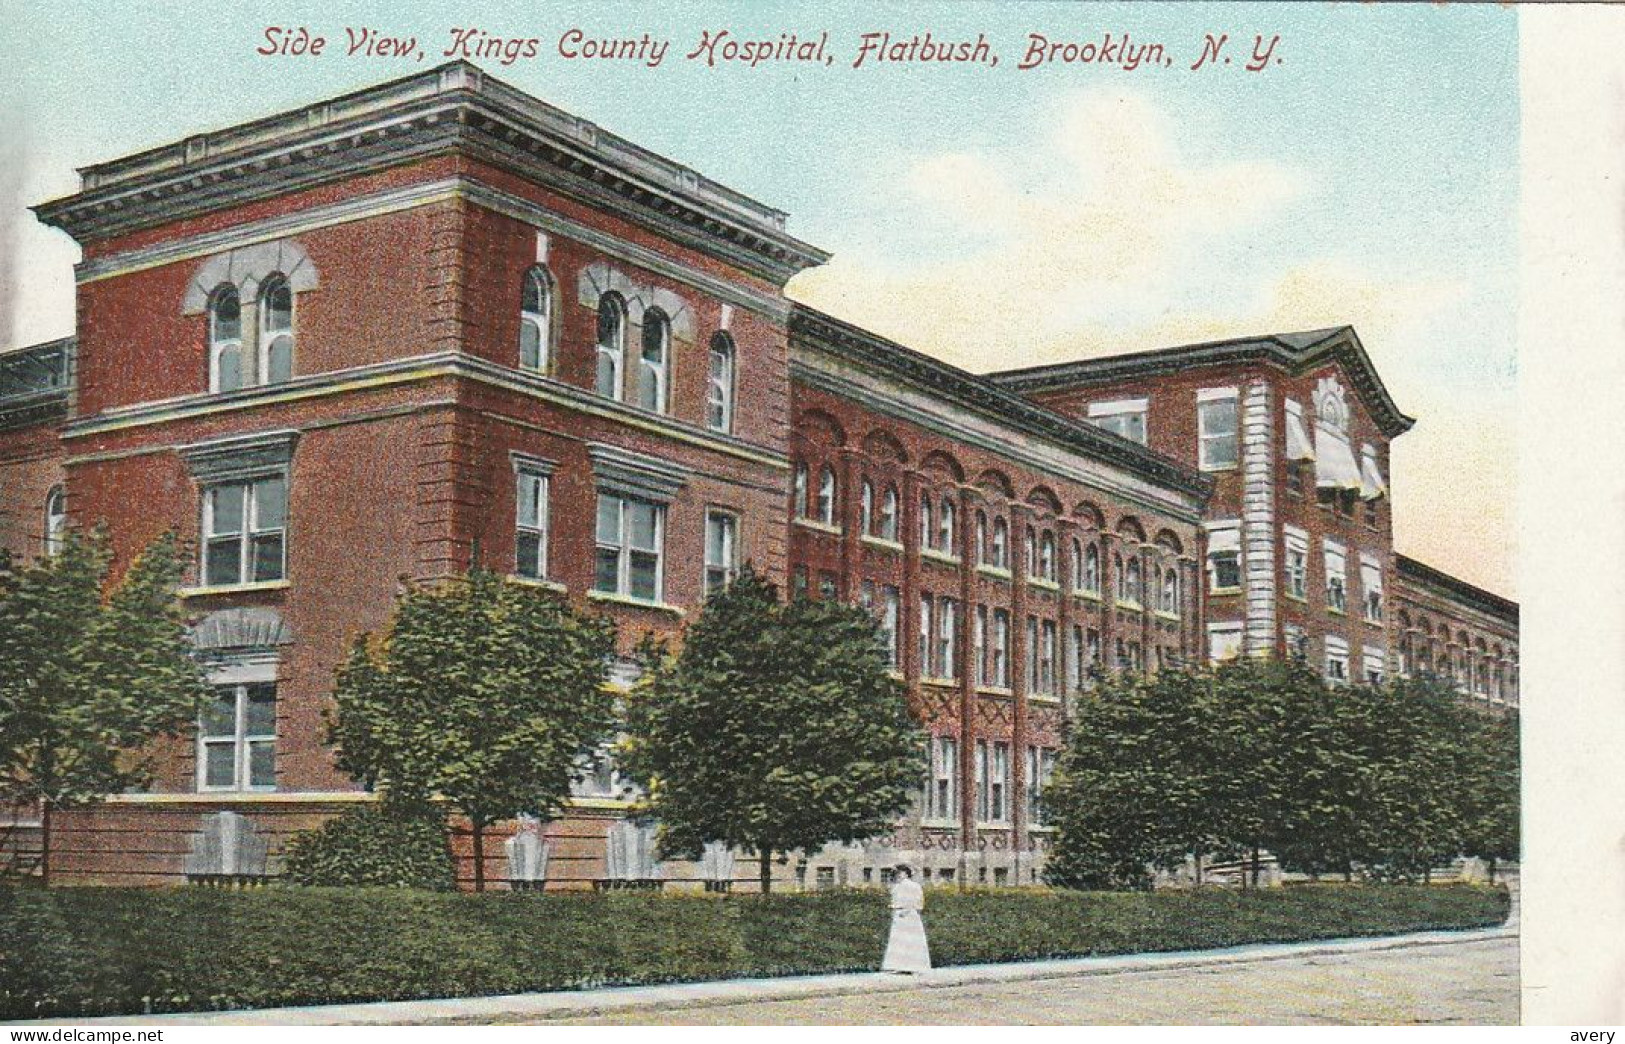 Side View, Kings County Hospital, Brooklyn, New York - Brooklyn